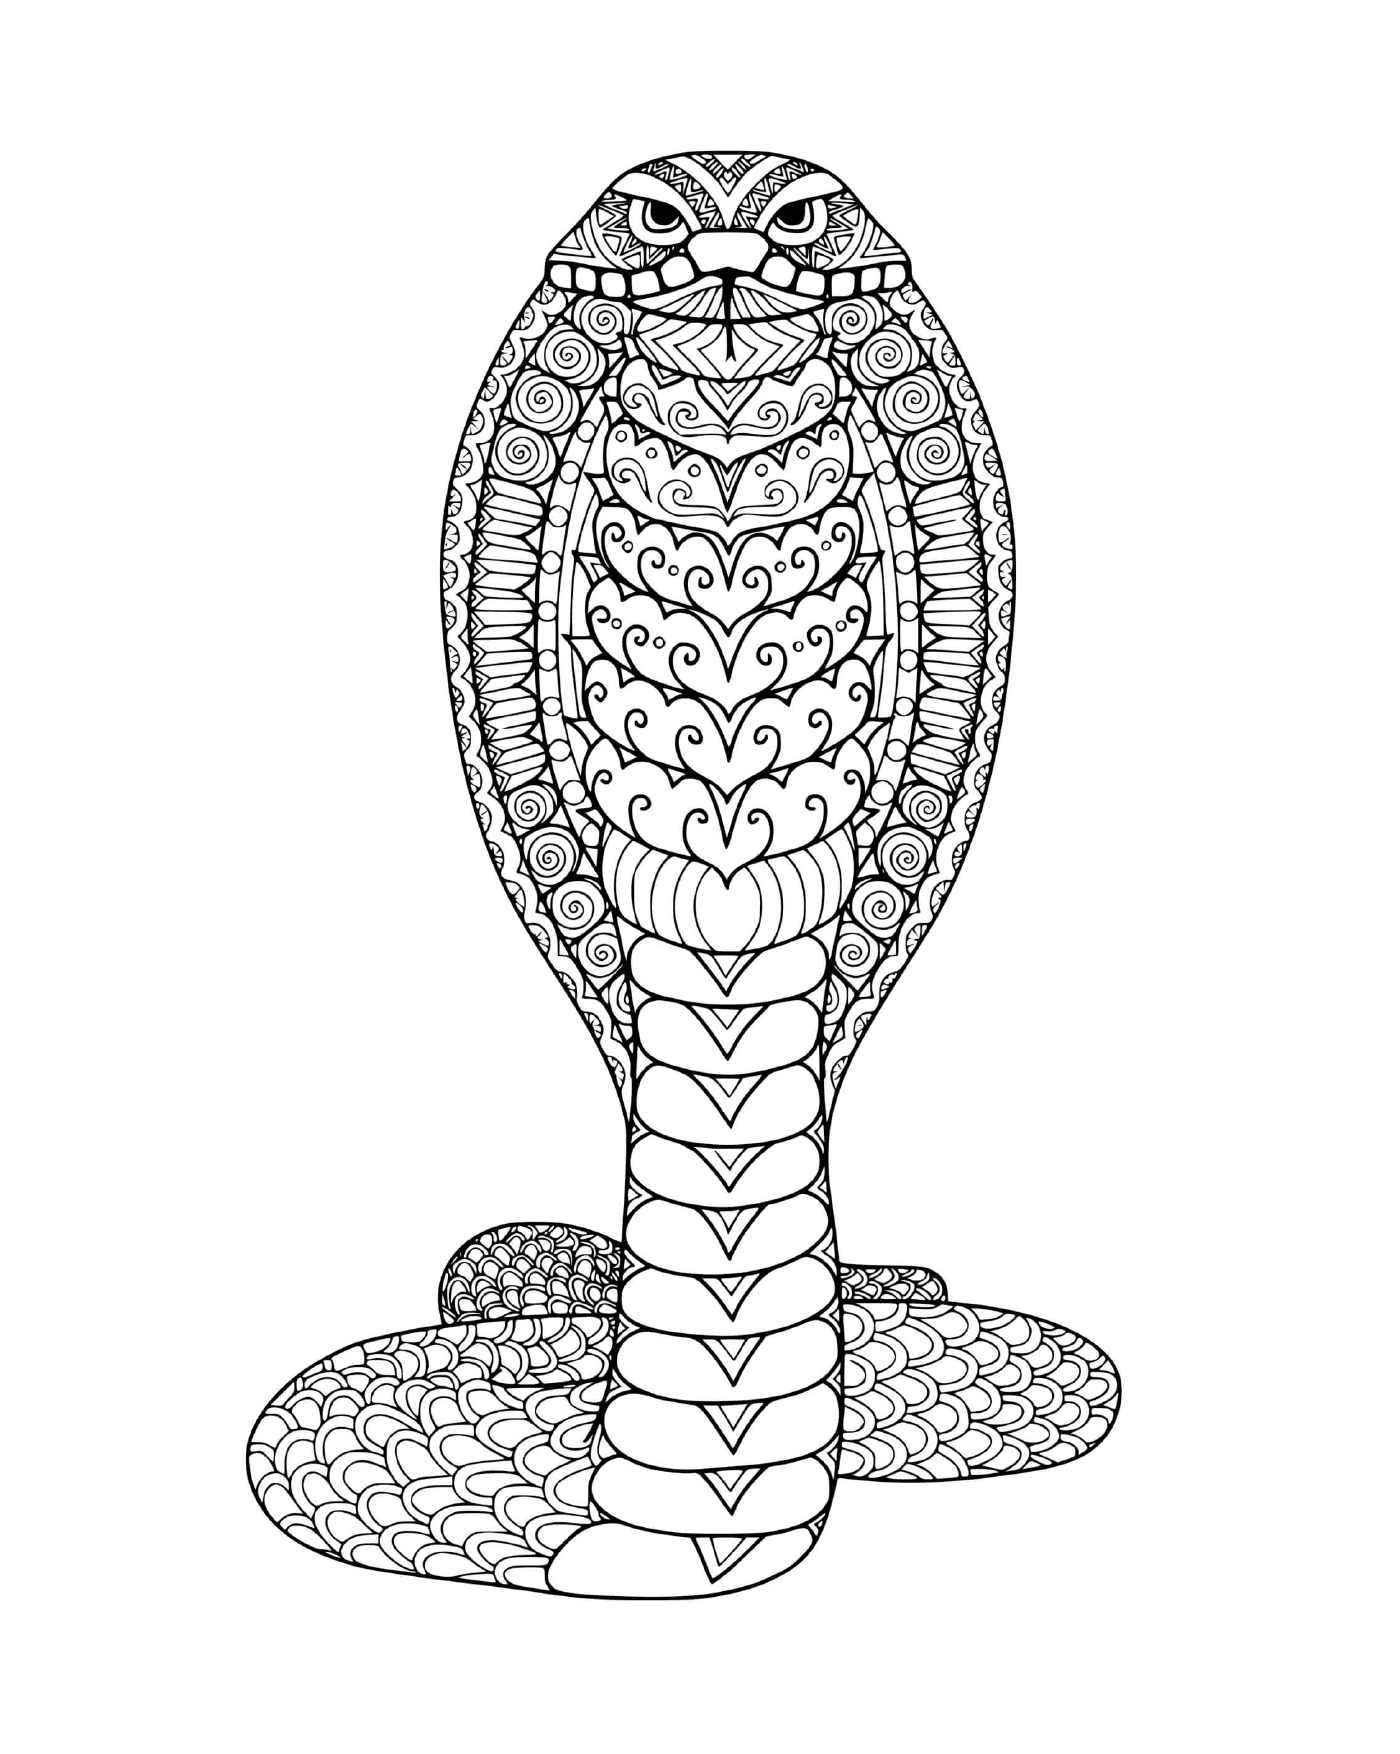  Serpiente de mandala adulta 